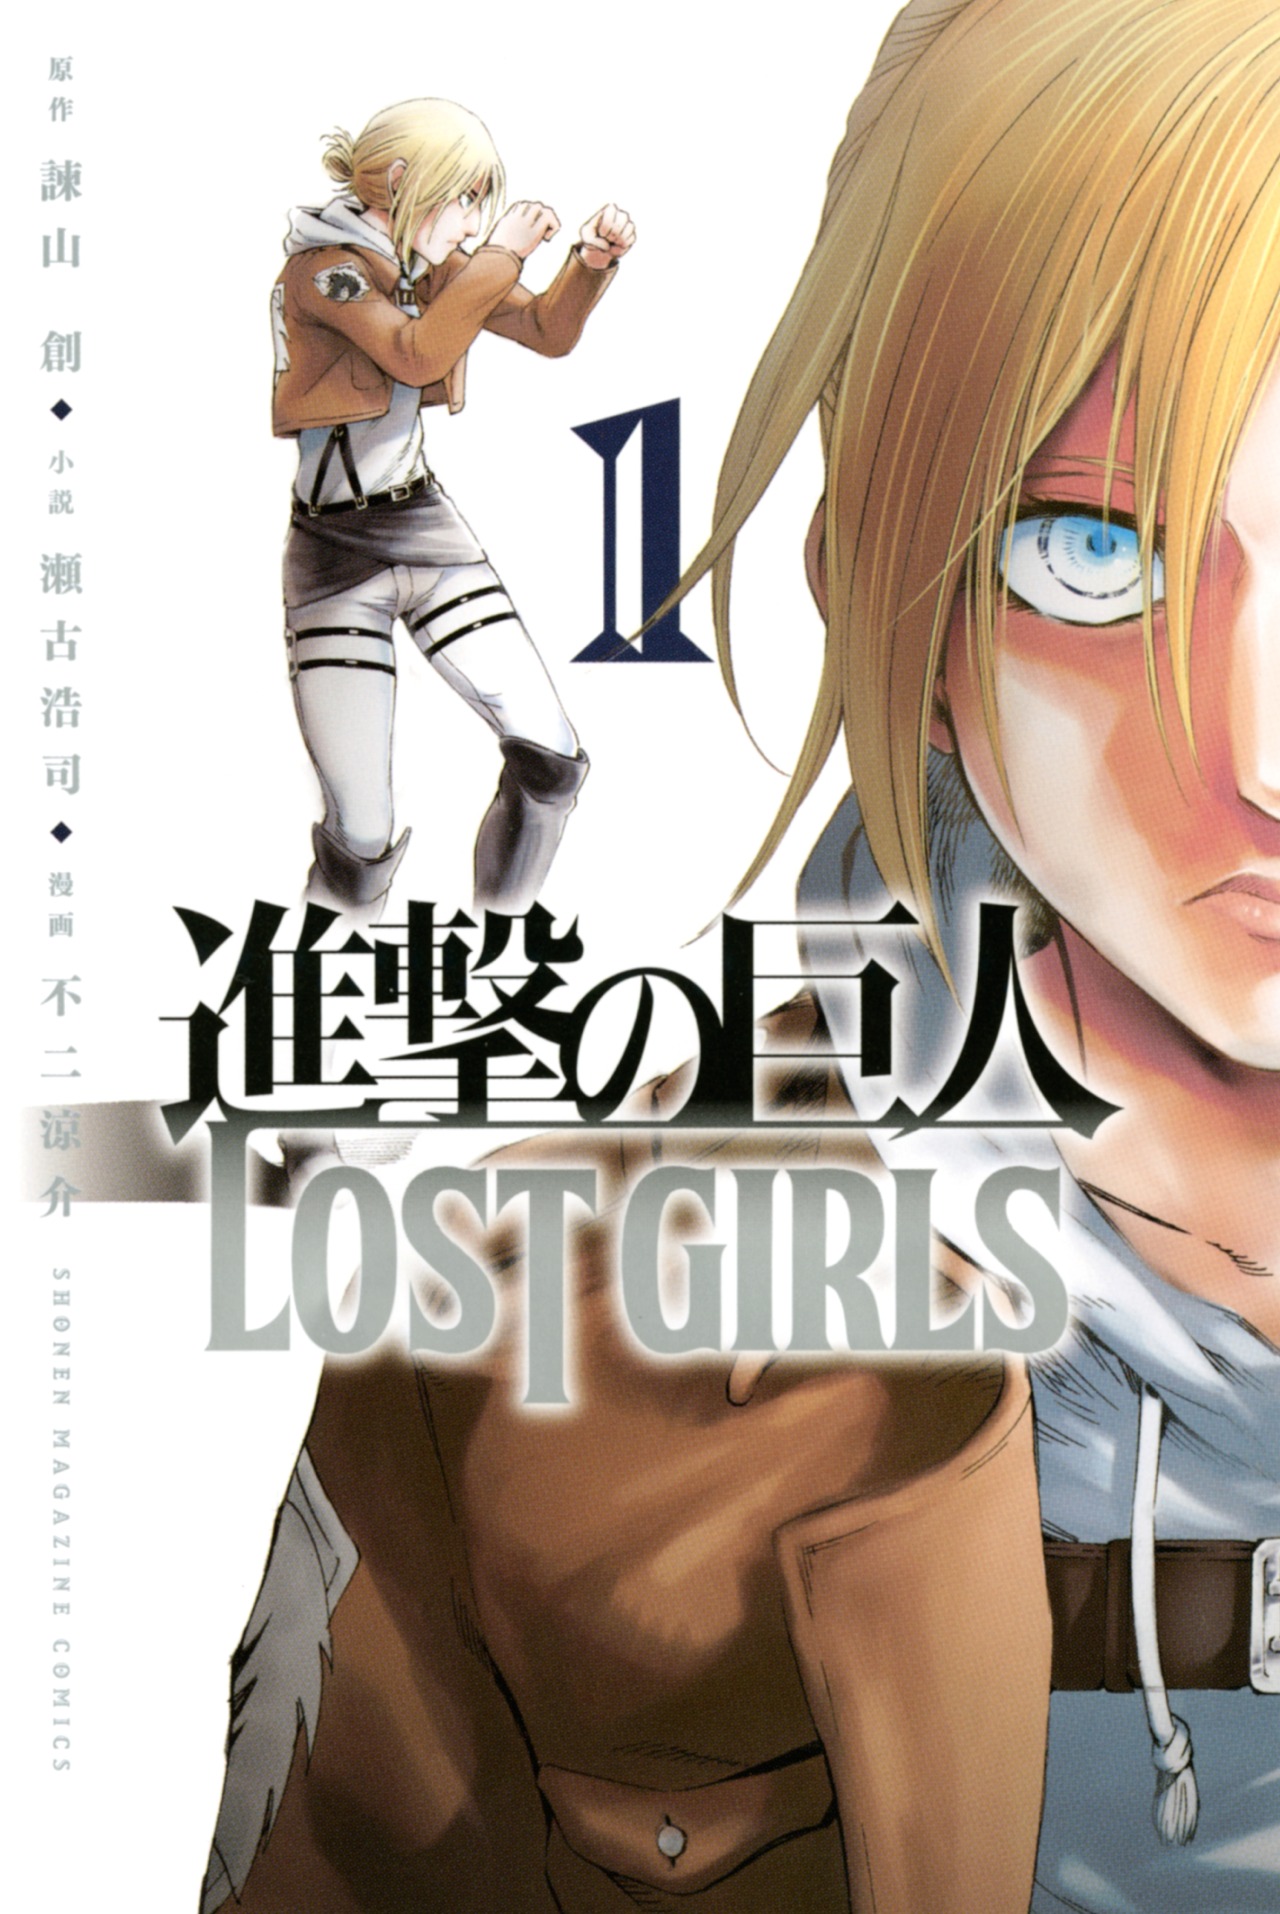 snkmerchandise:  News: Lost Girls Volume 1 (Japanese | English) Original Release